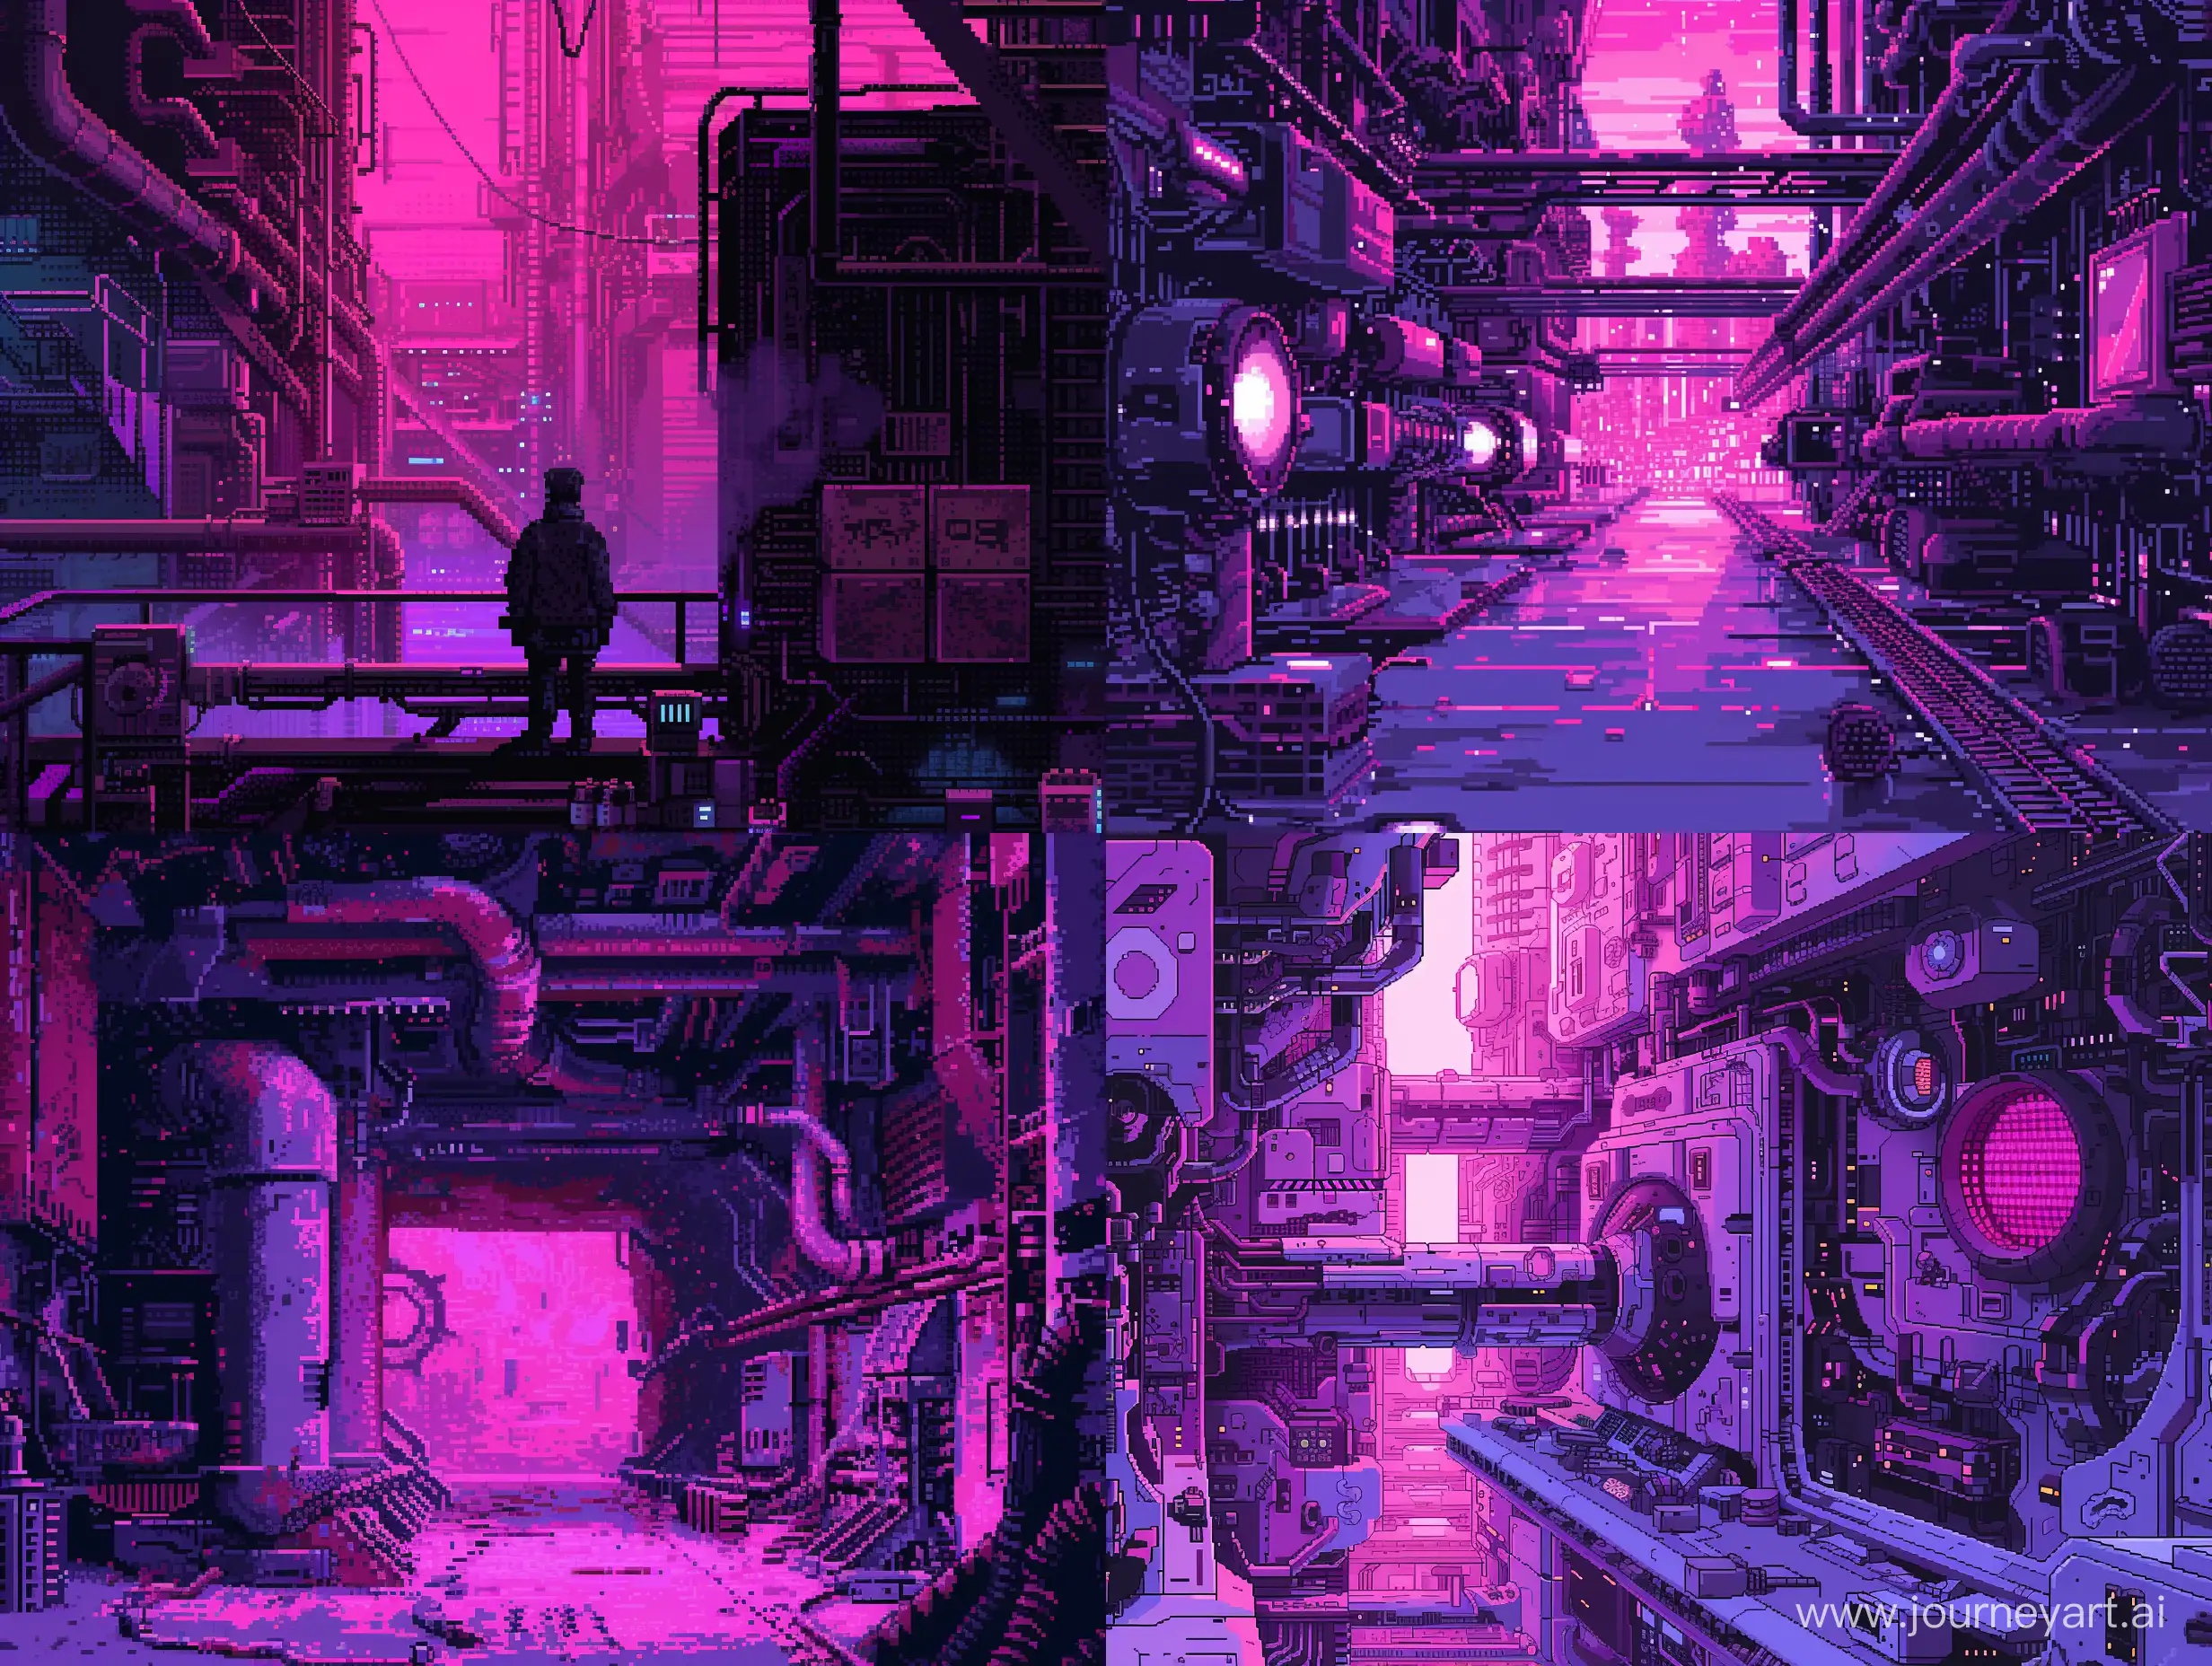 Futuristic-Cyberpunk-Cityscape-in-Dominant-Purple-and-Pink-Pixel-Art